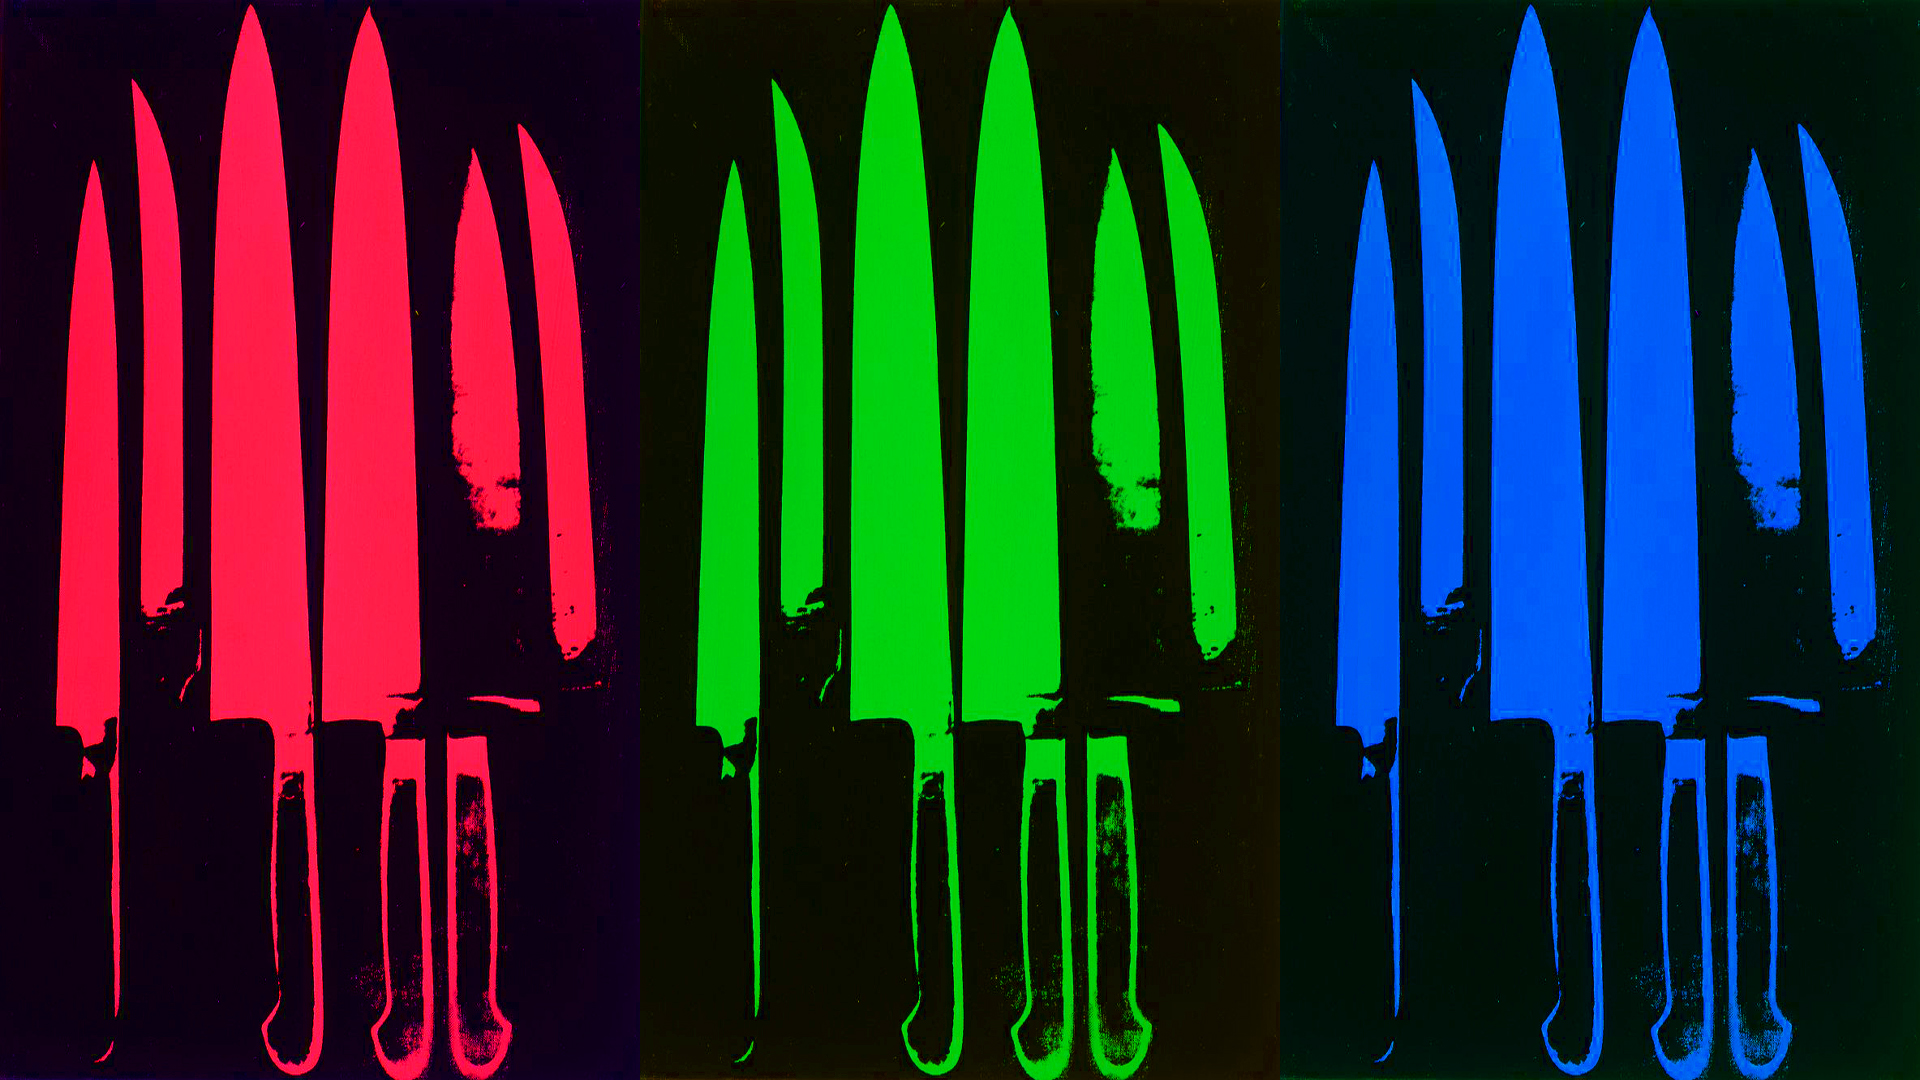 Download the Andy Warhol Knives Wallpaper, Andy Warhol Knives